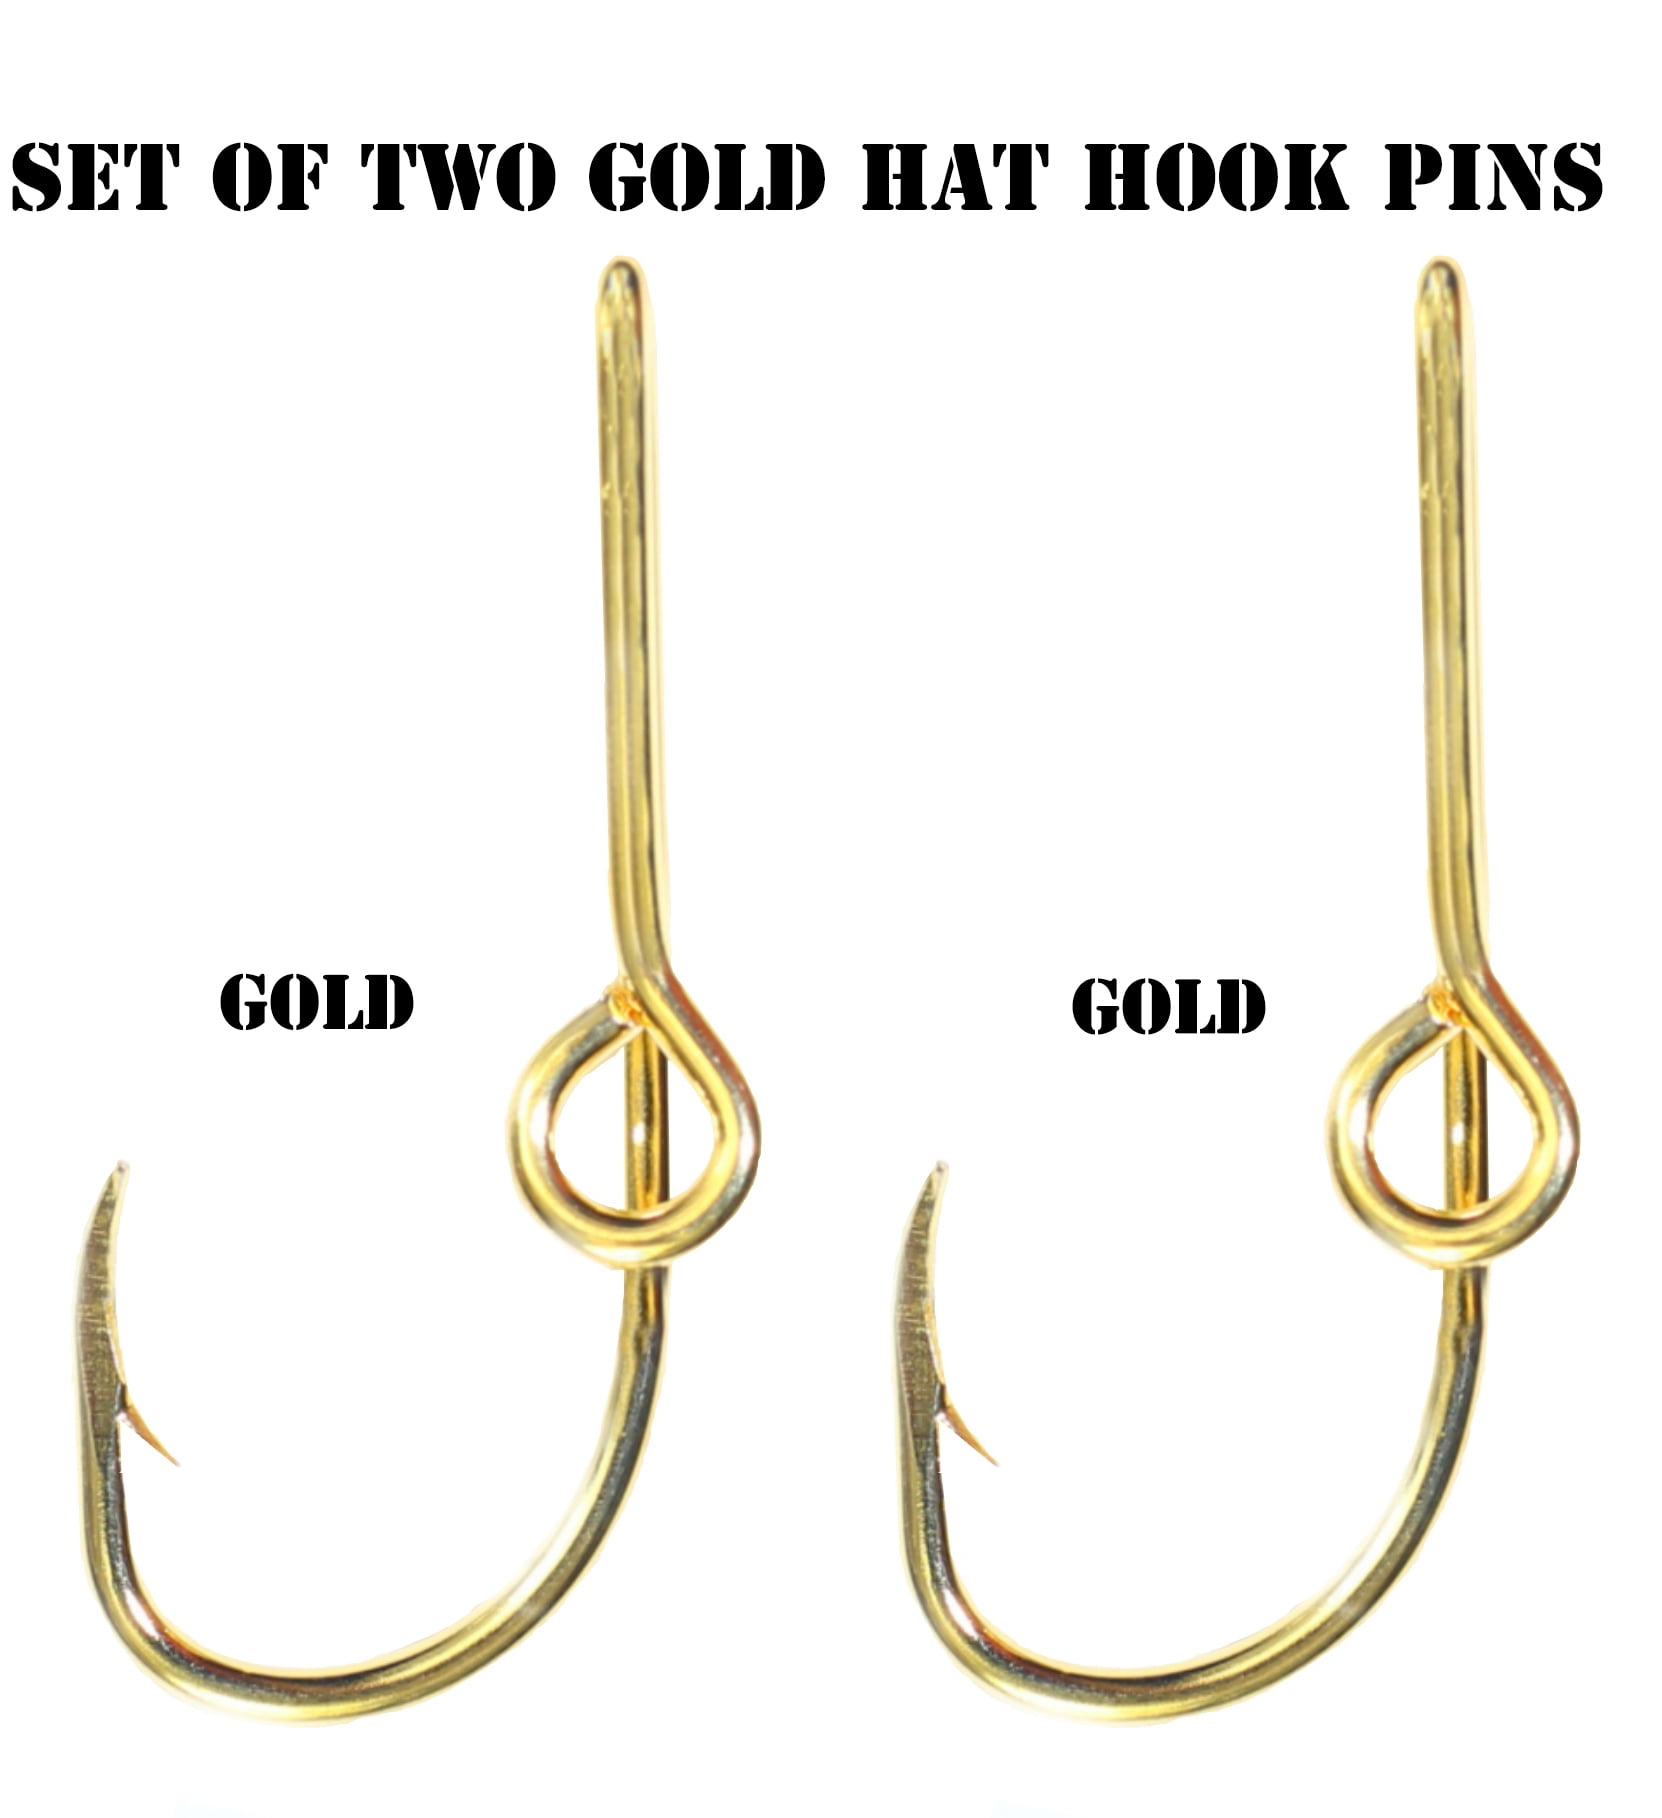 Fish Hook Hat